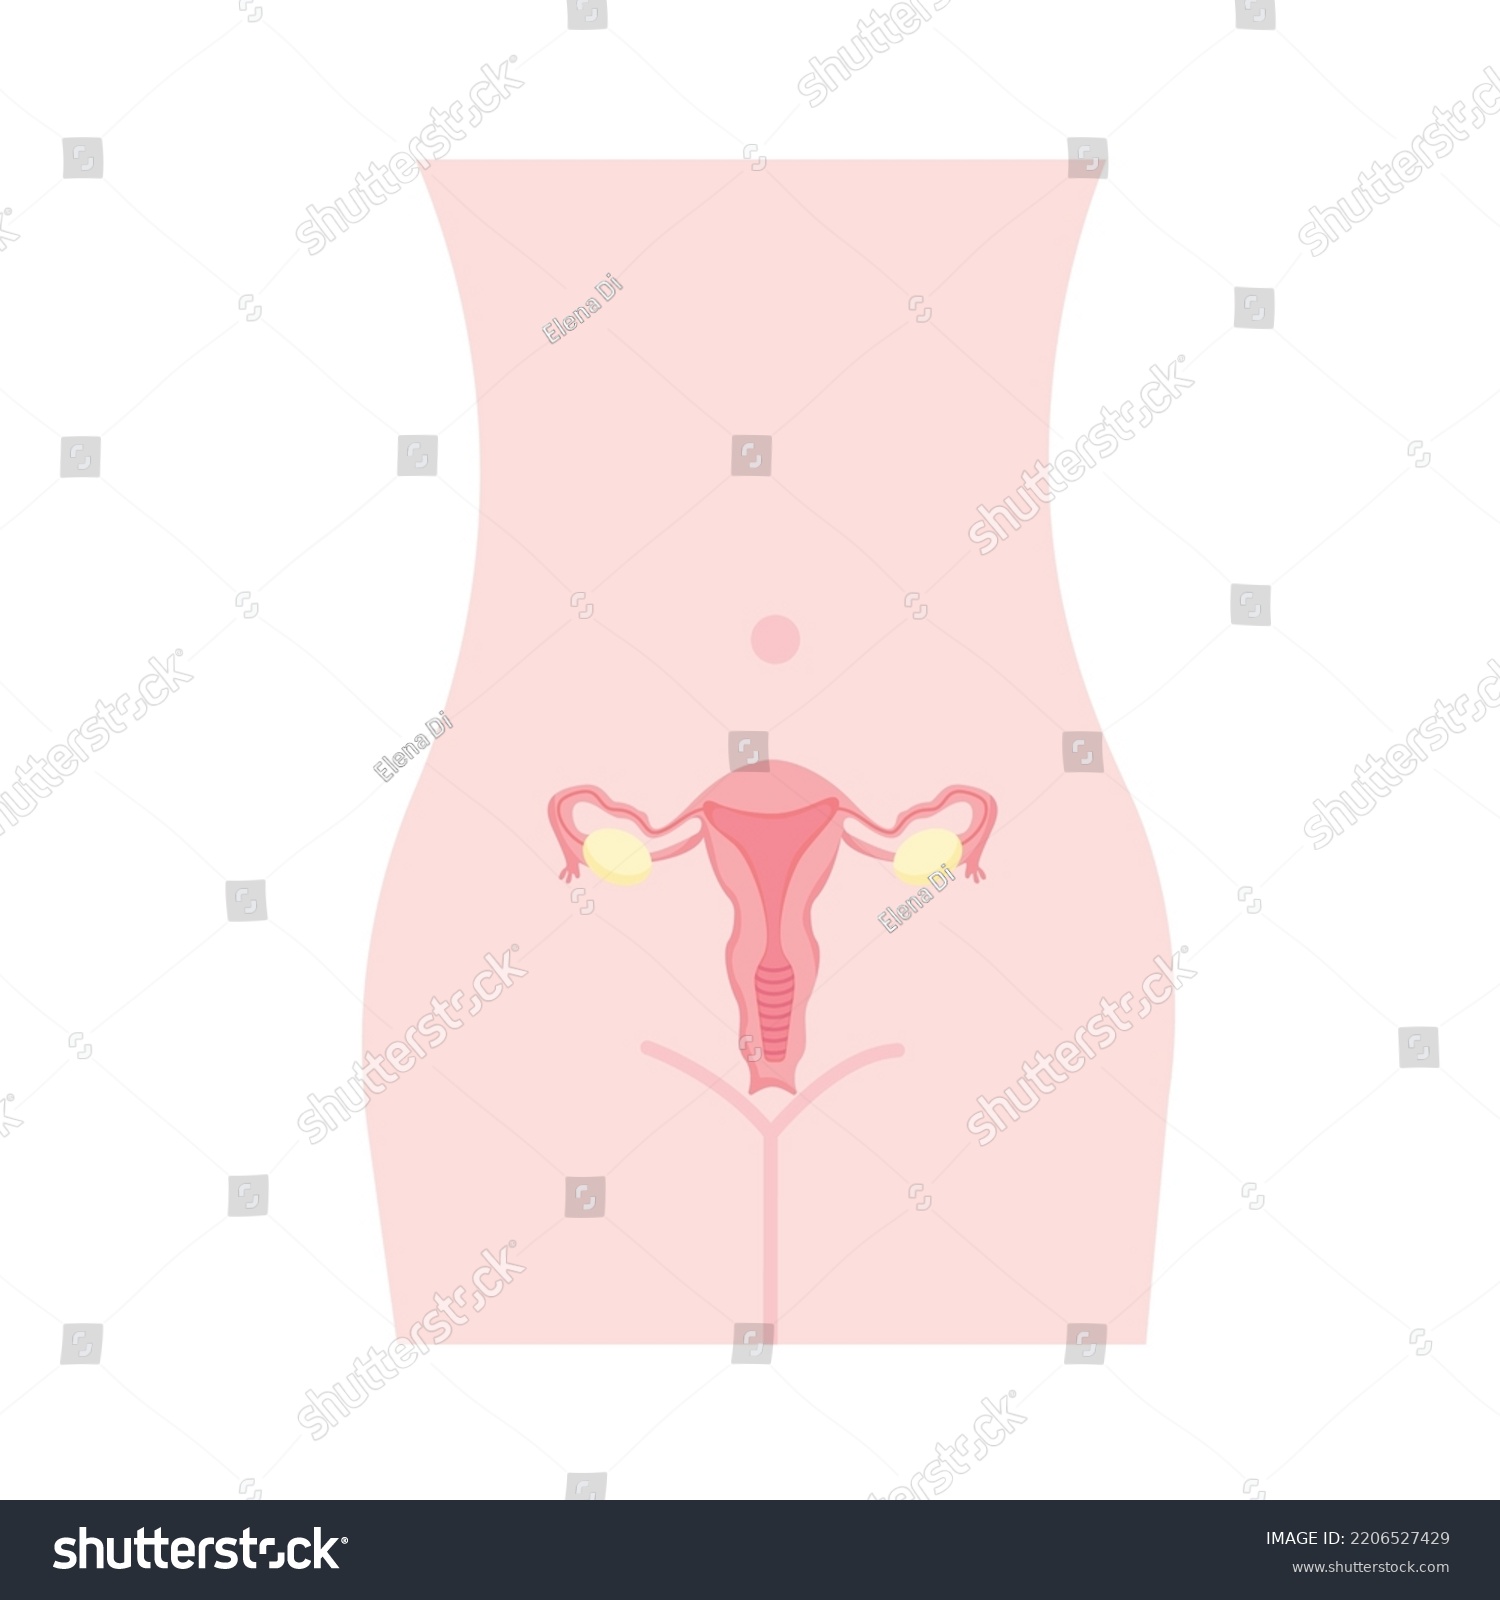 Female Genital Organs Female Body Vector Royalty Free Stock Vector 2206527429 0593